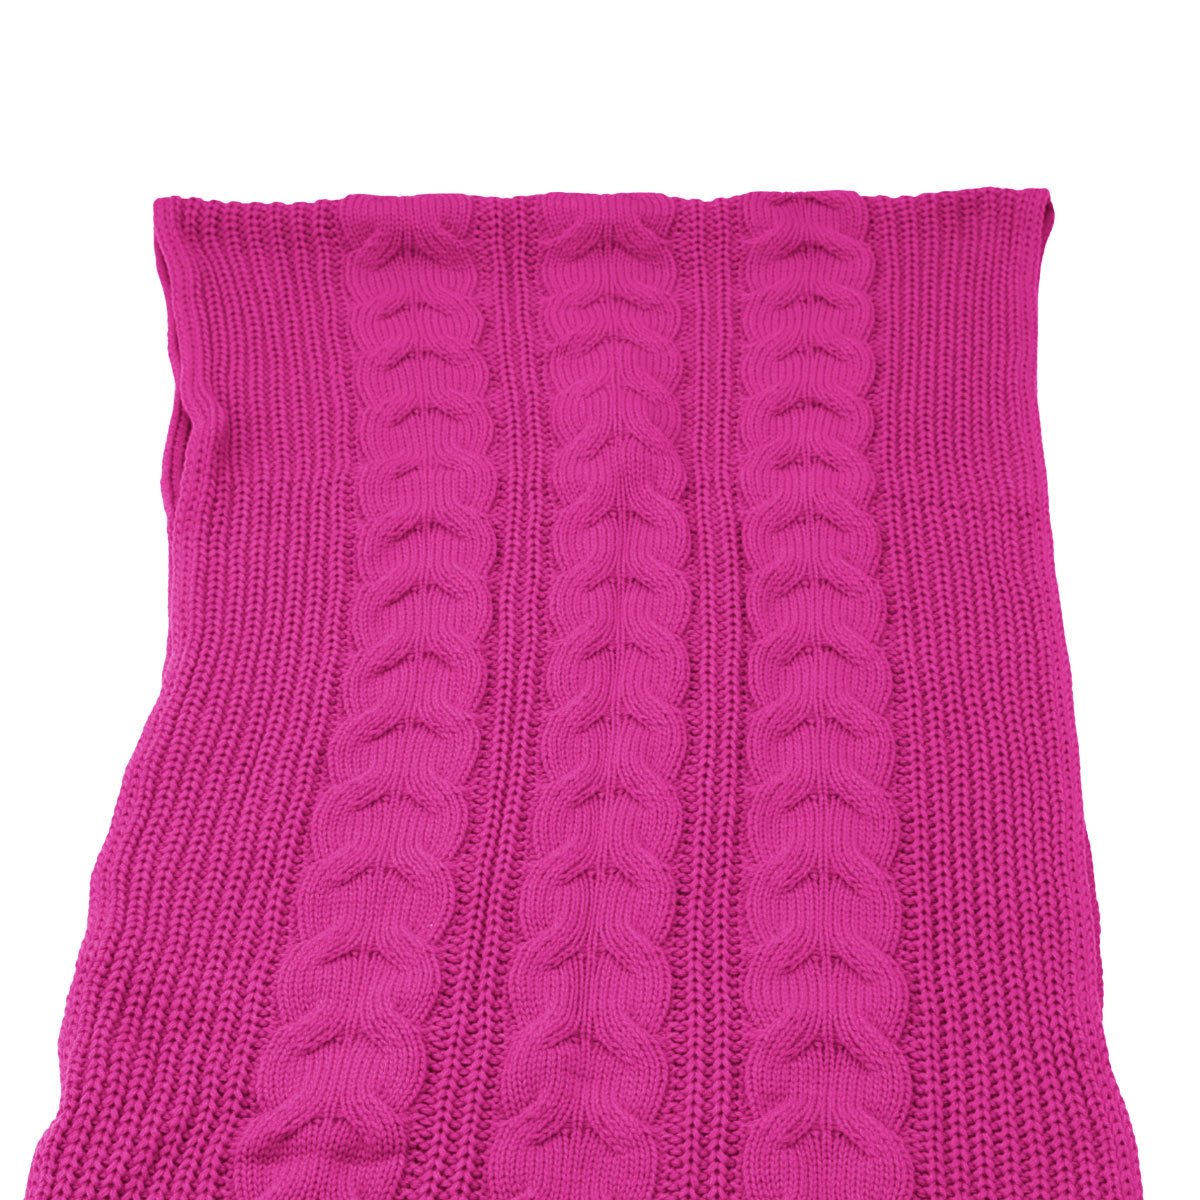 Peseira de tricot cama Queen 60 x 220cm tressage Rosa Pink - 6